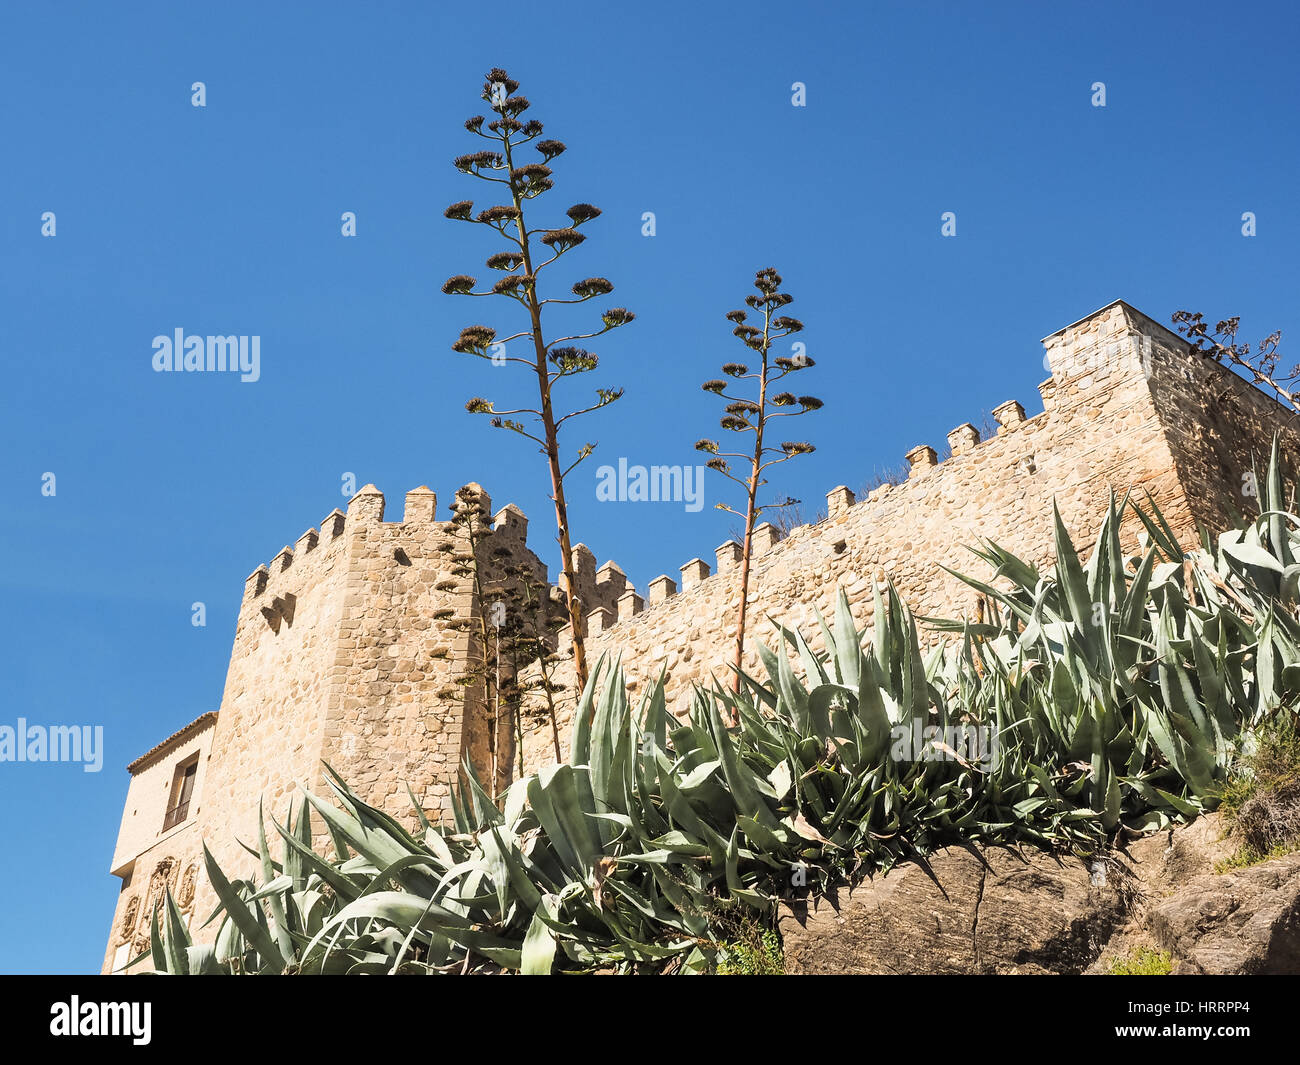 Kloster de Los reyes mit Agaven, Toledo, Spanien Stockfoto